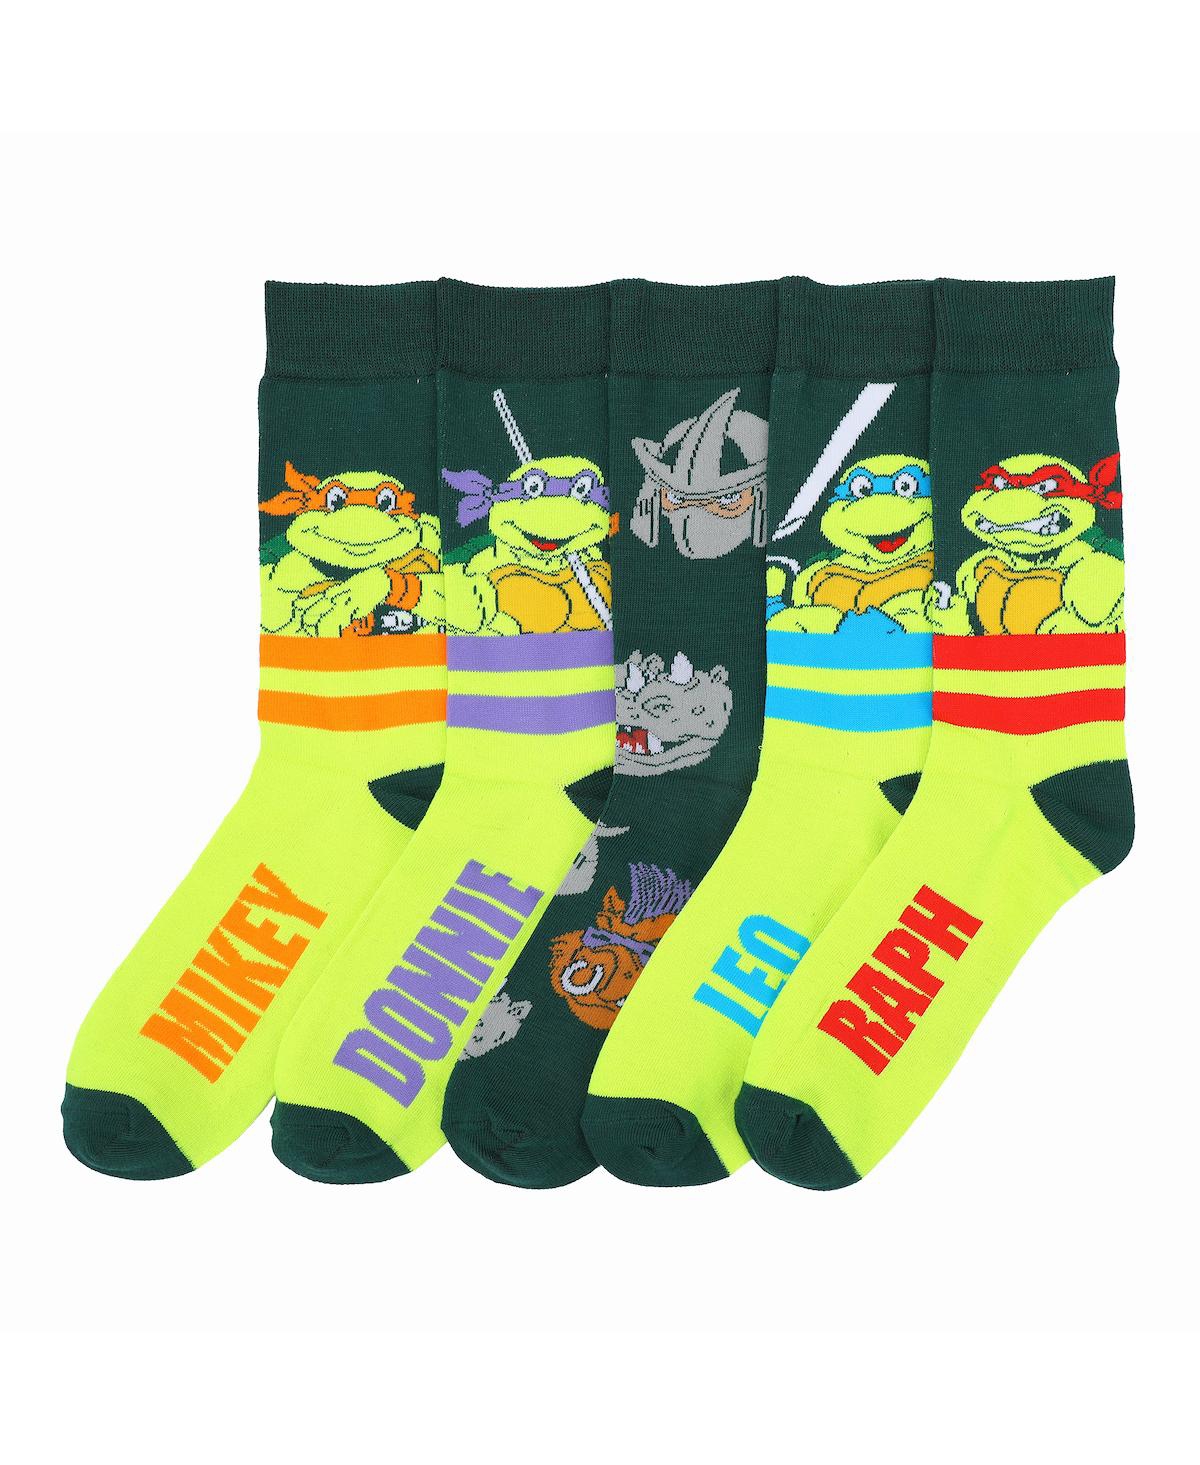 Men's Characters 5-Pair Casual Crew Socks - Multicolored